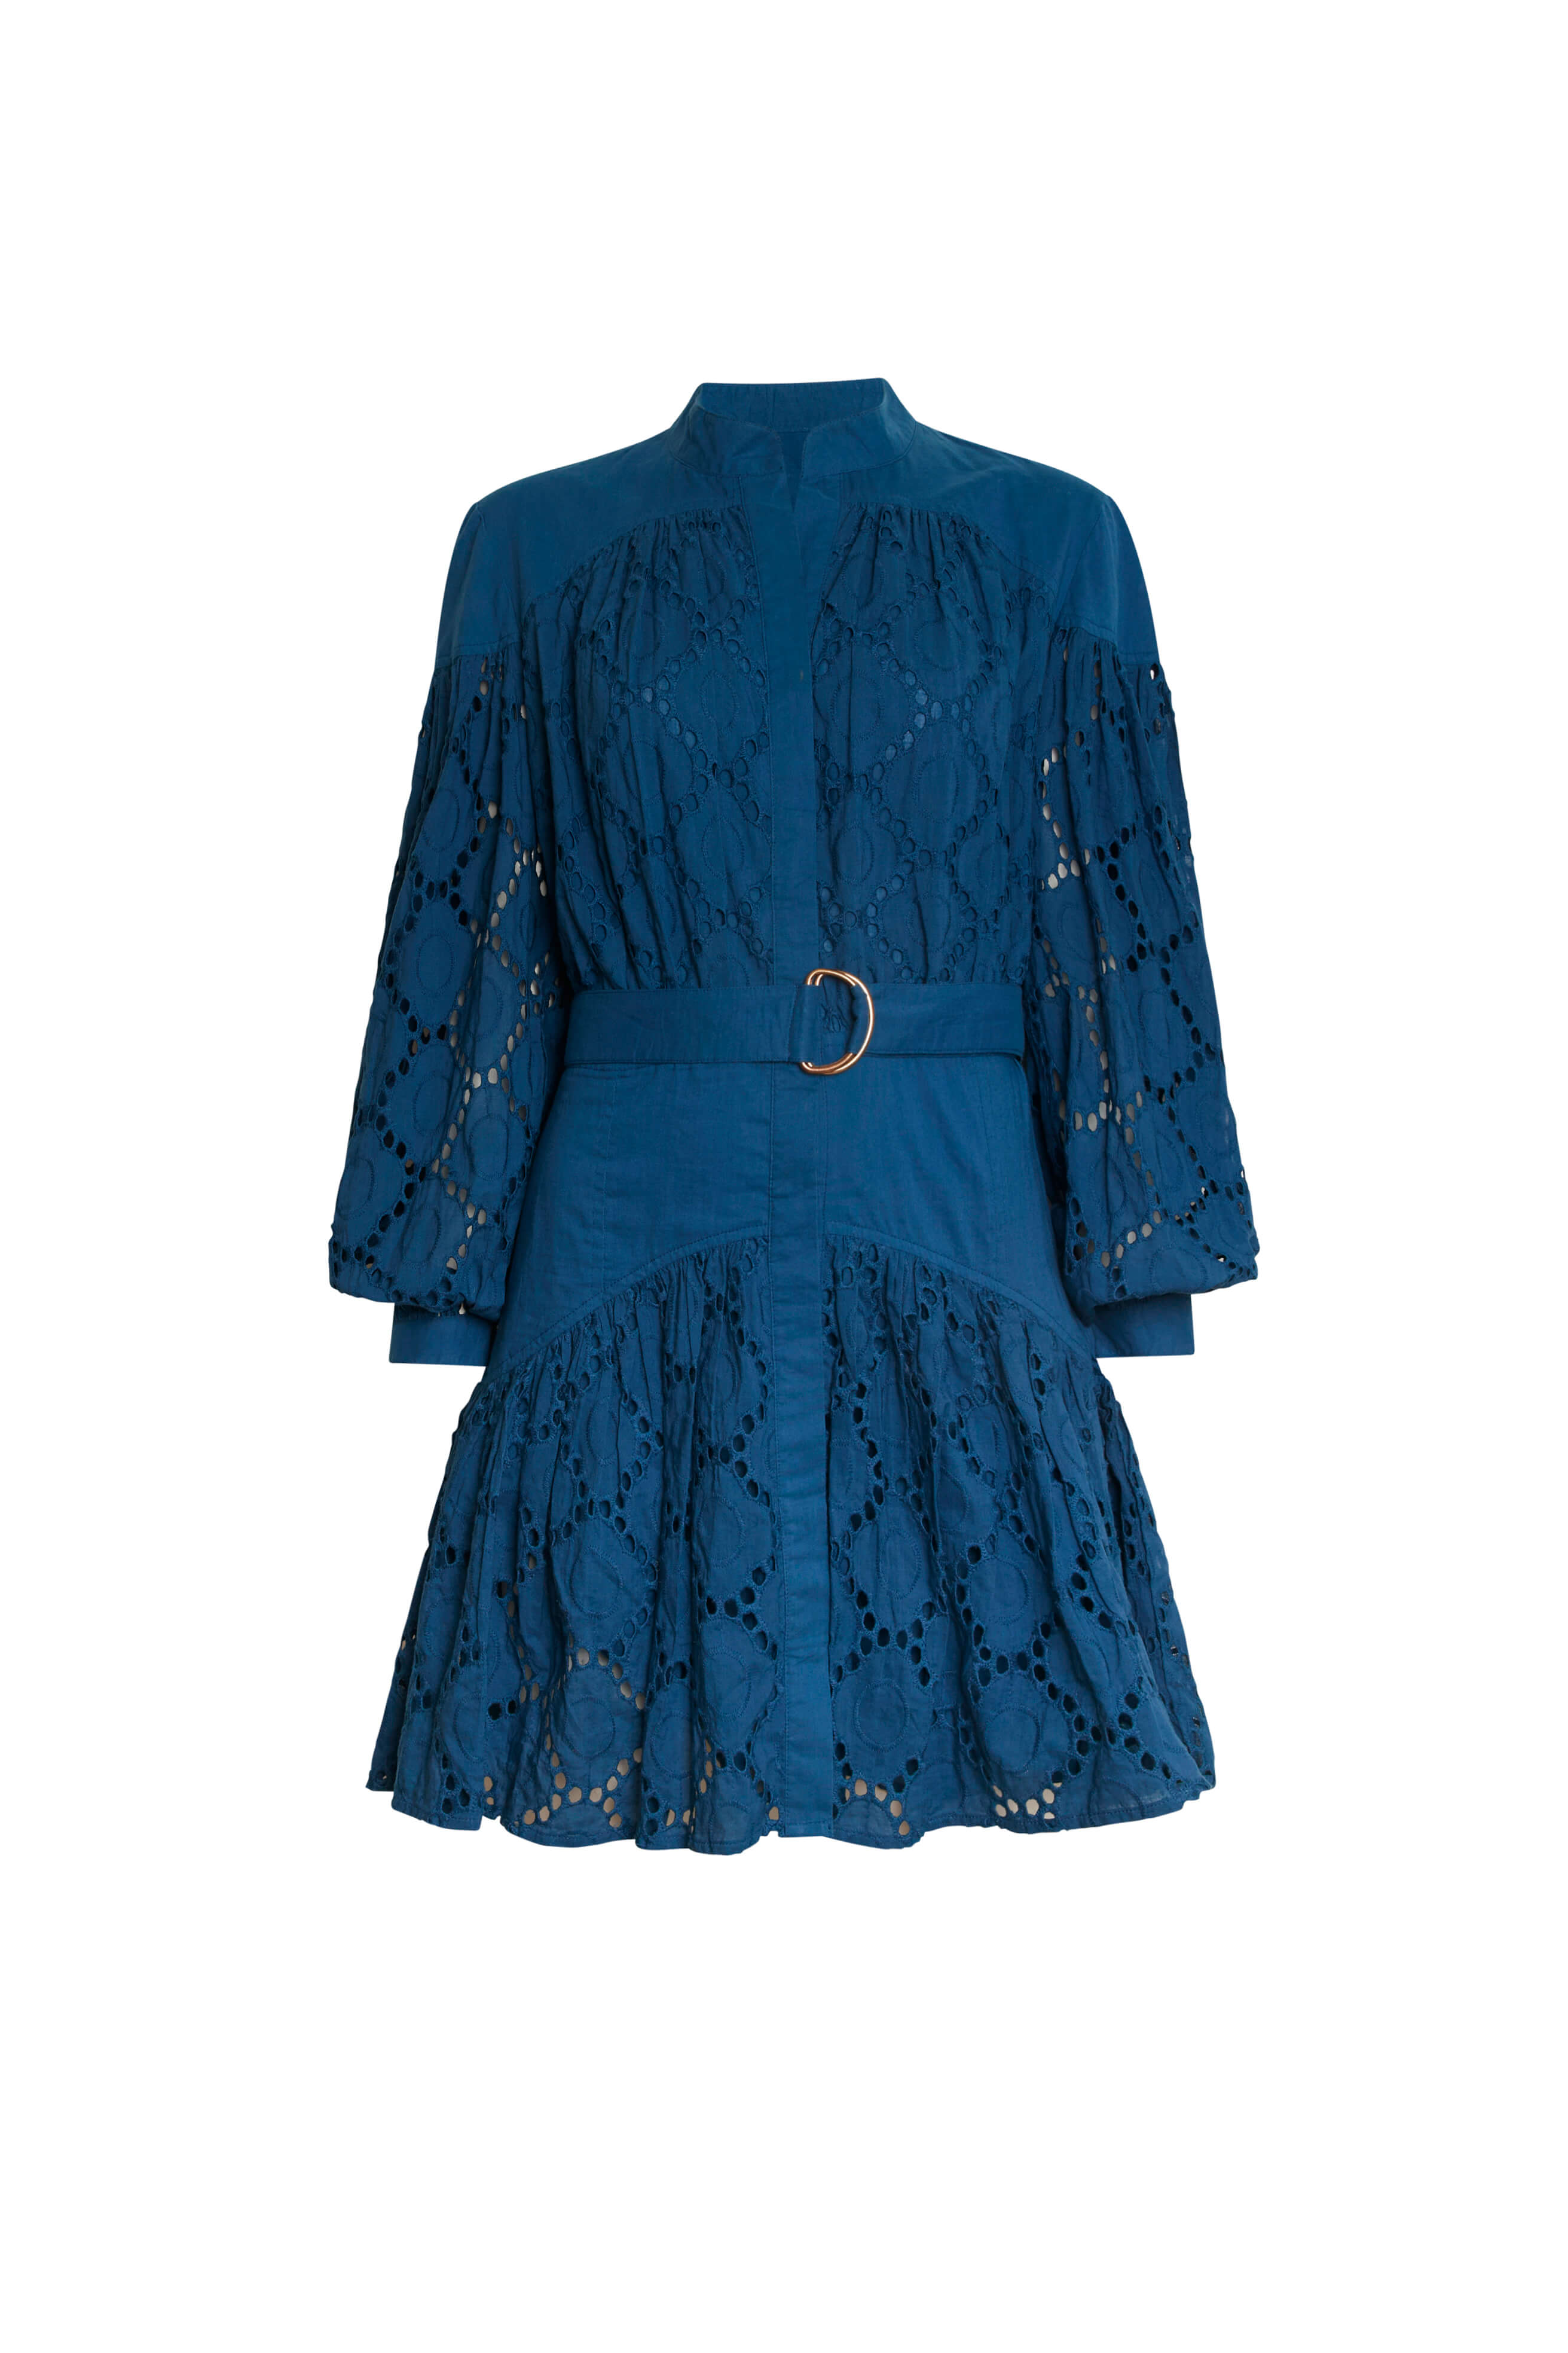 James Lakeland Women's Blue Broderie Anglaise Short Dress